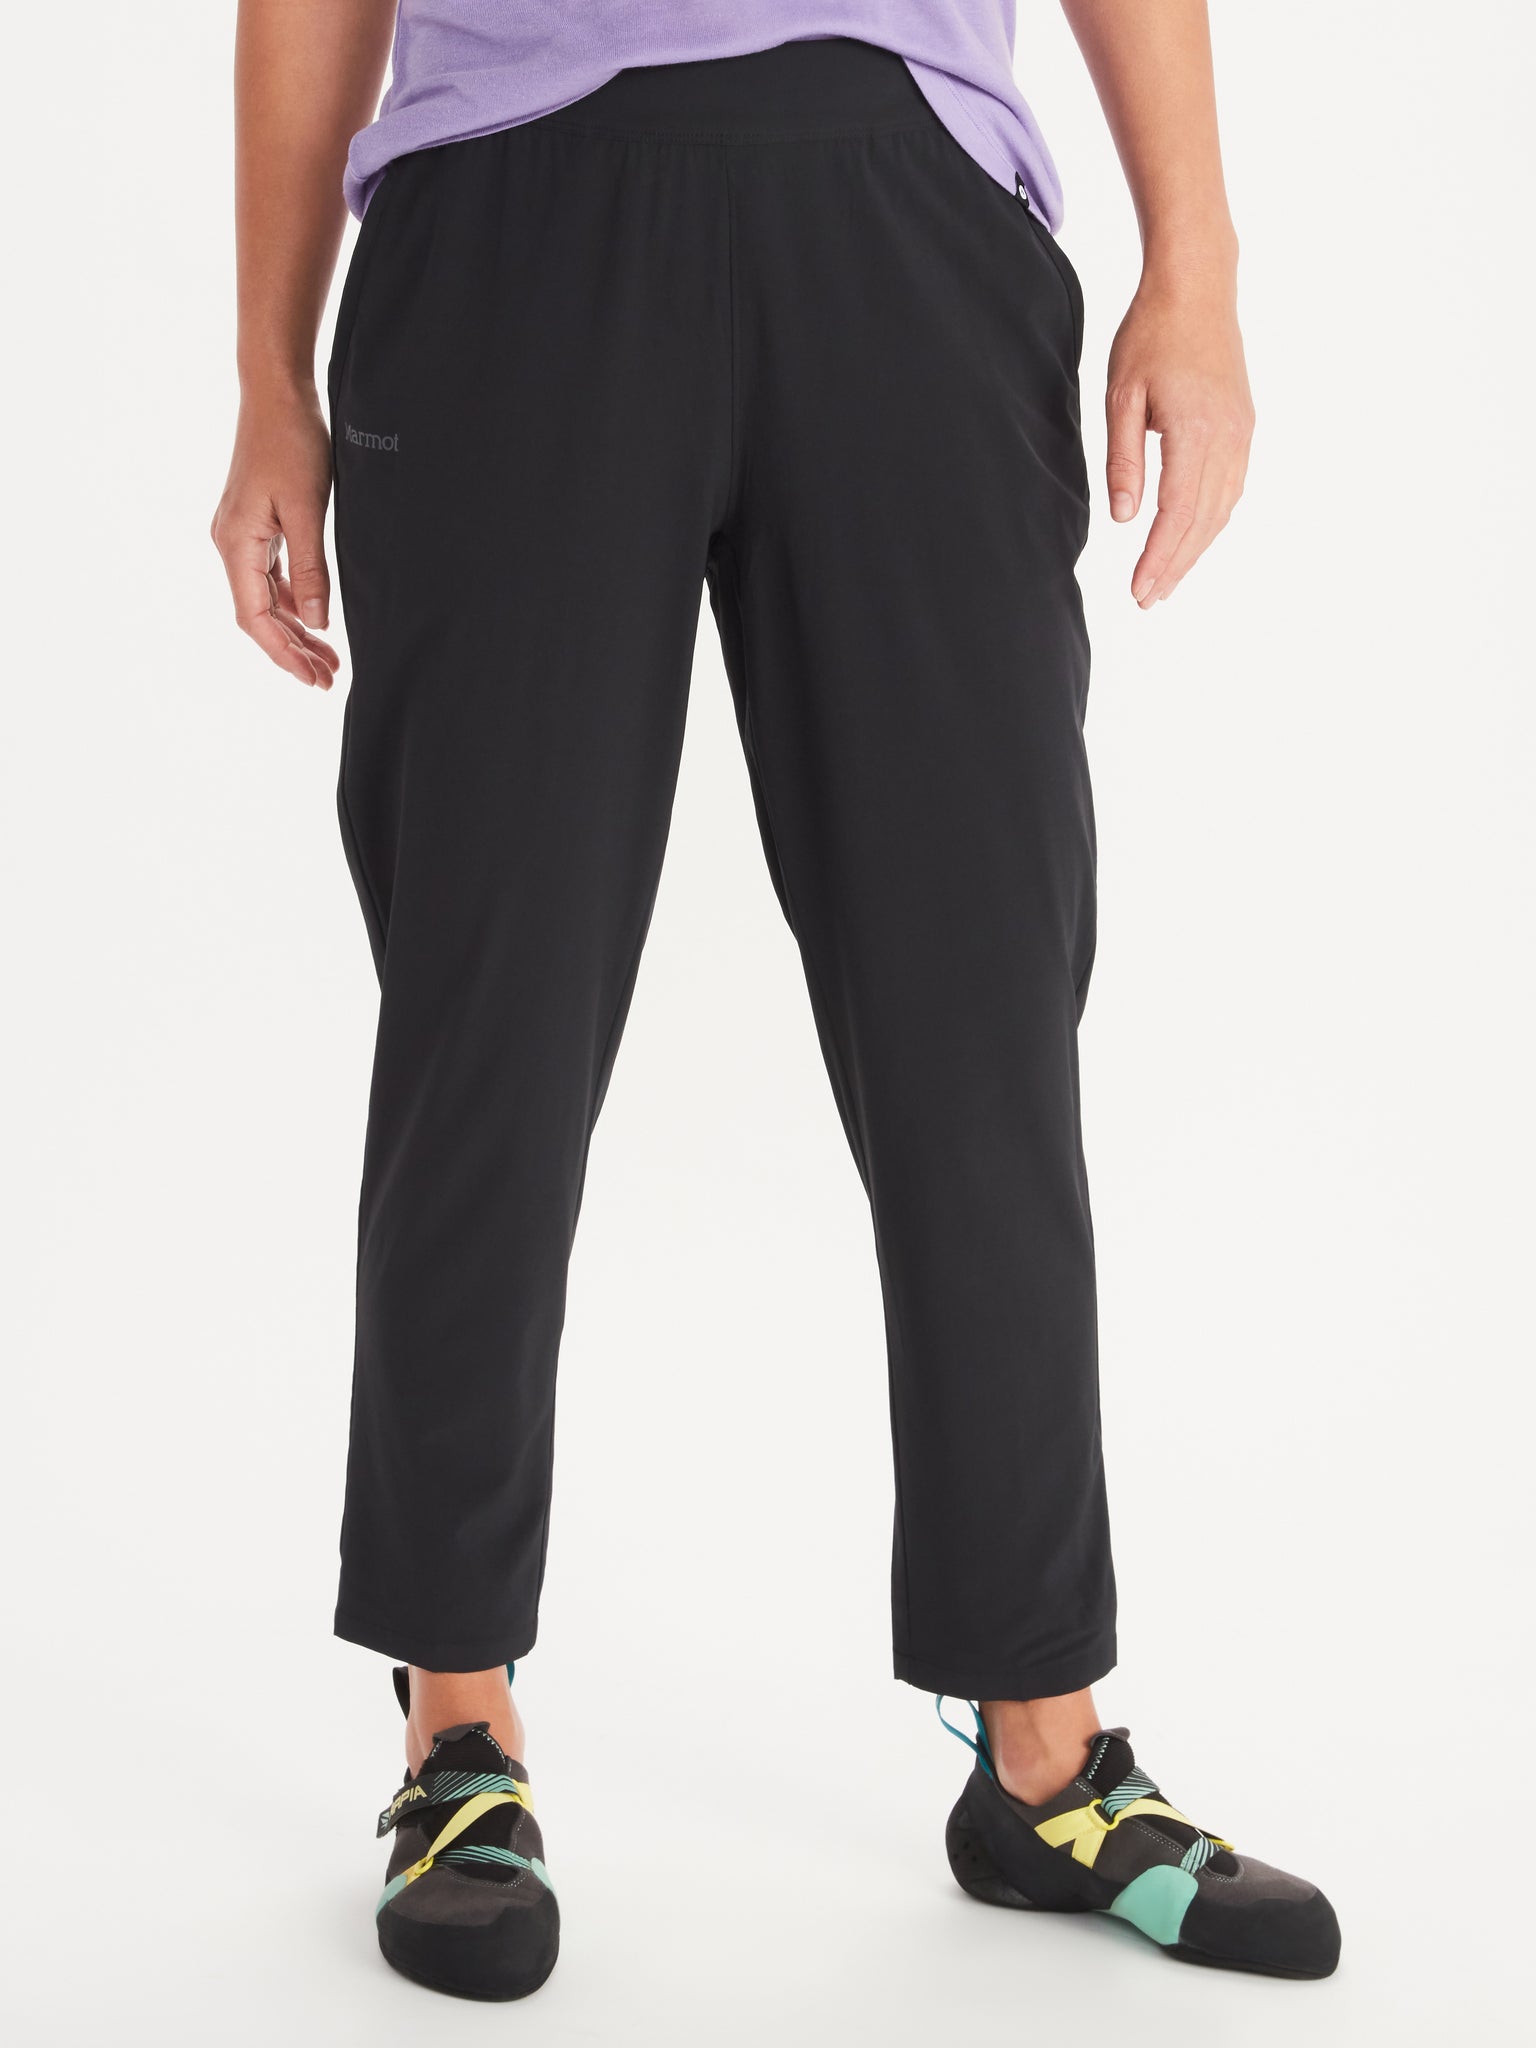 Marmot Pulse Short Womens Running Pants - Pants - Fitness Clothing